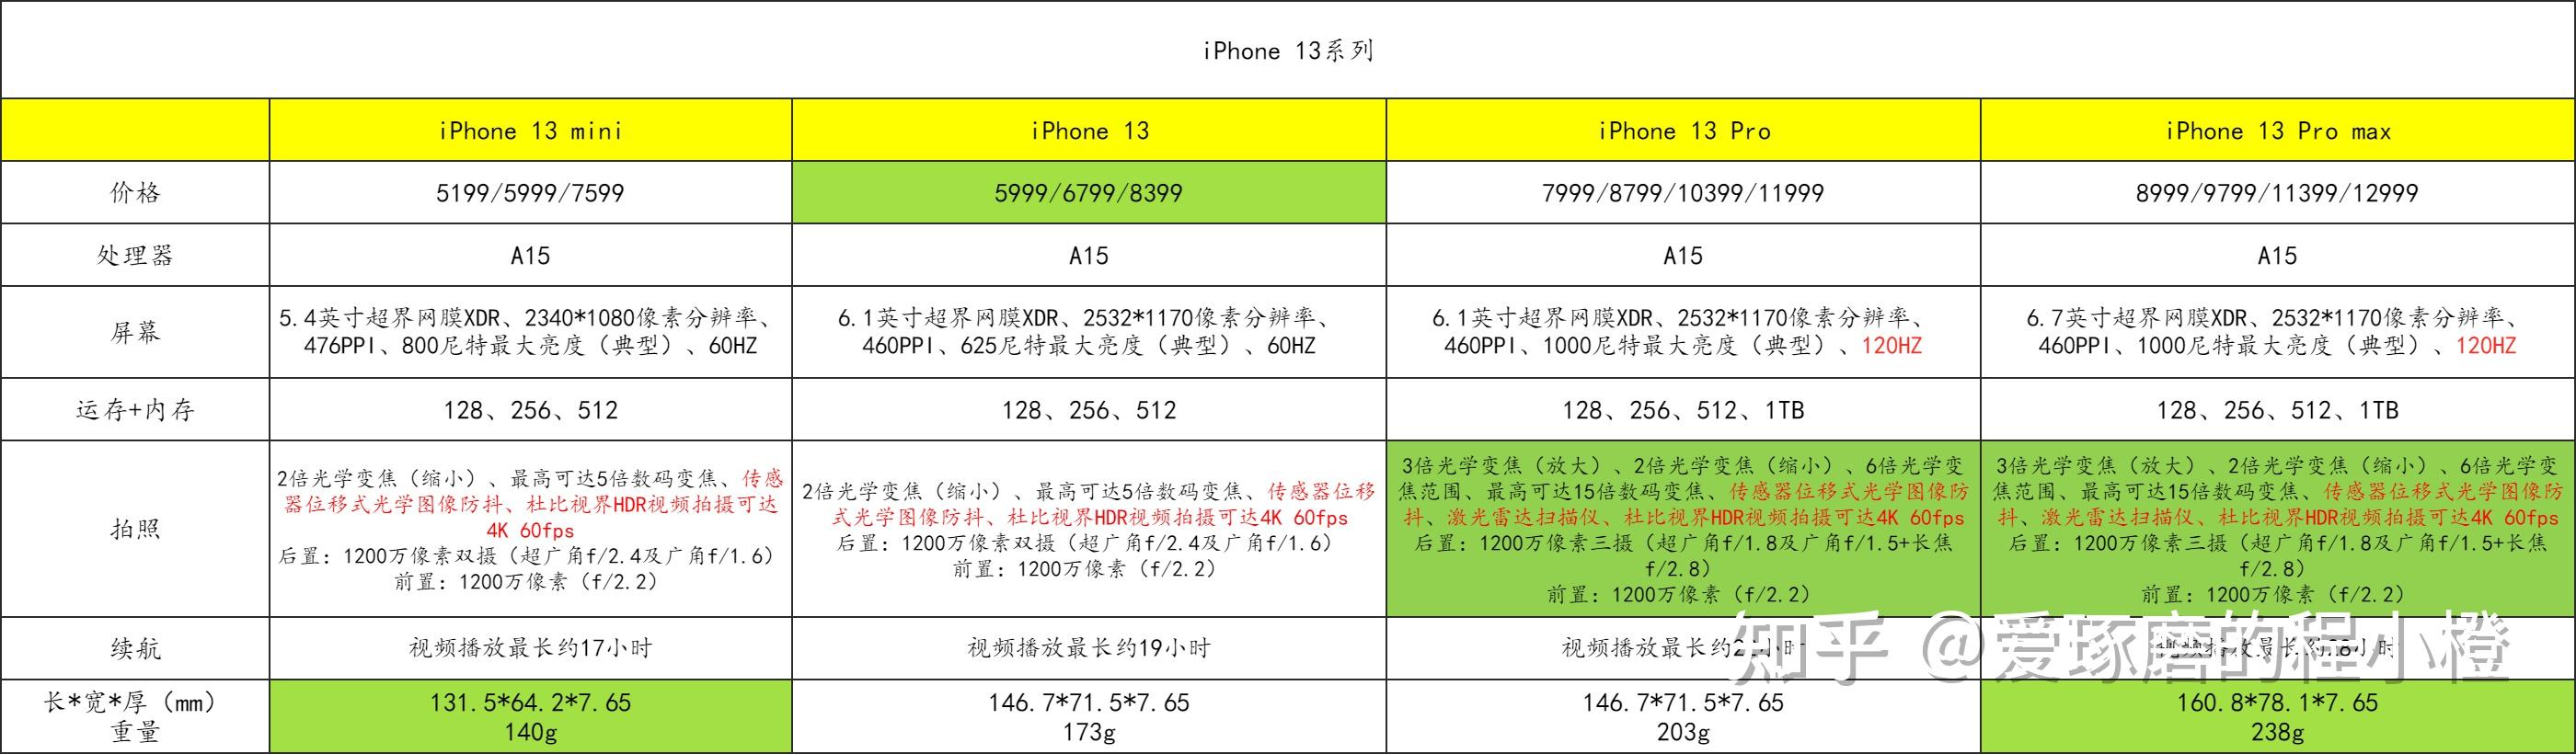 iphone13怎么样i手机参数对比iiphone13比iphone12提升了哪些方面